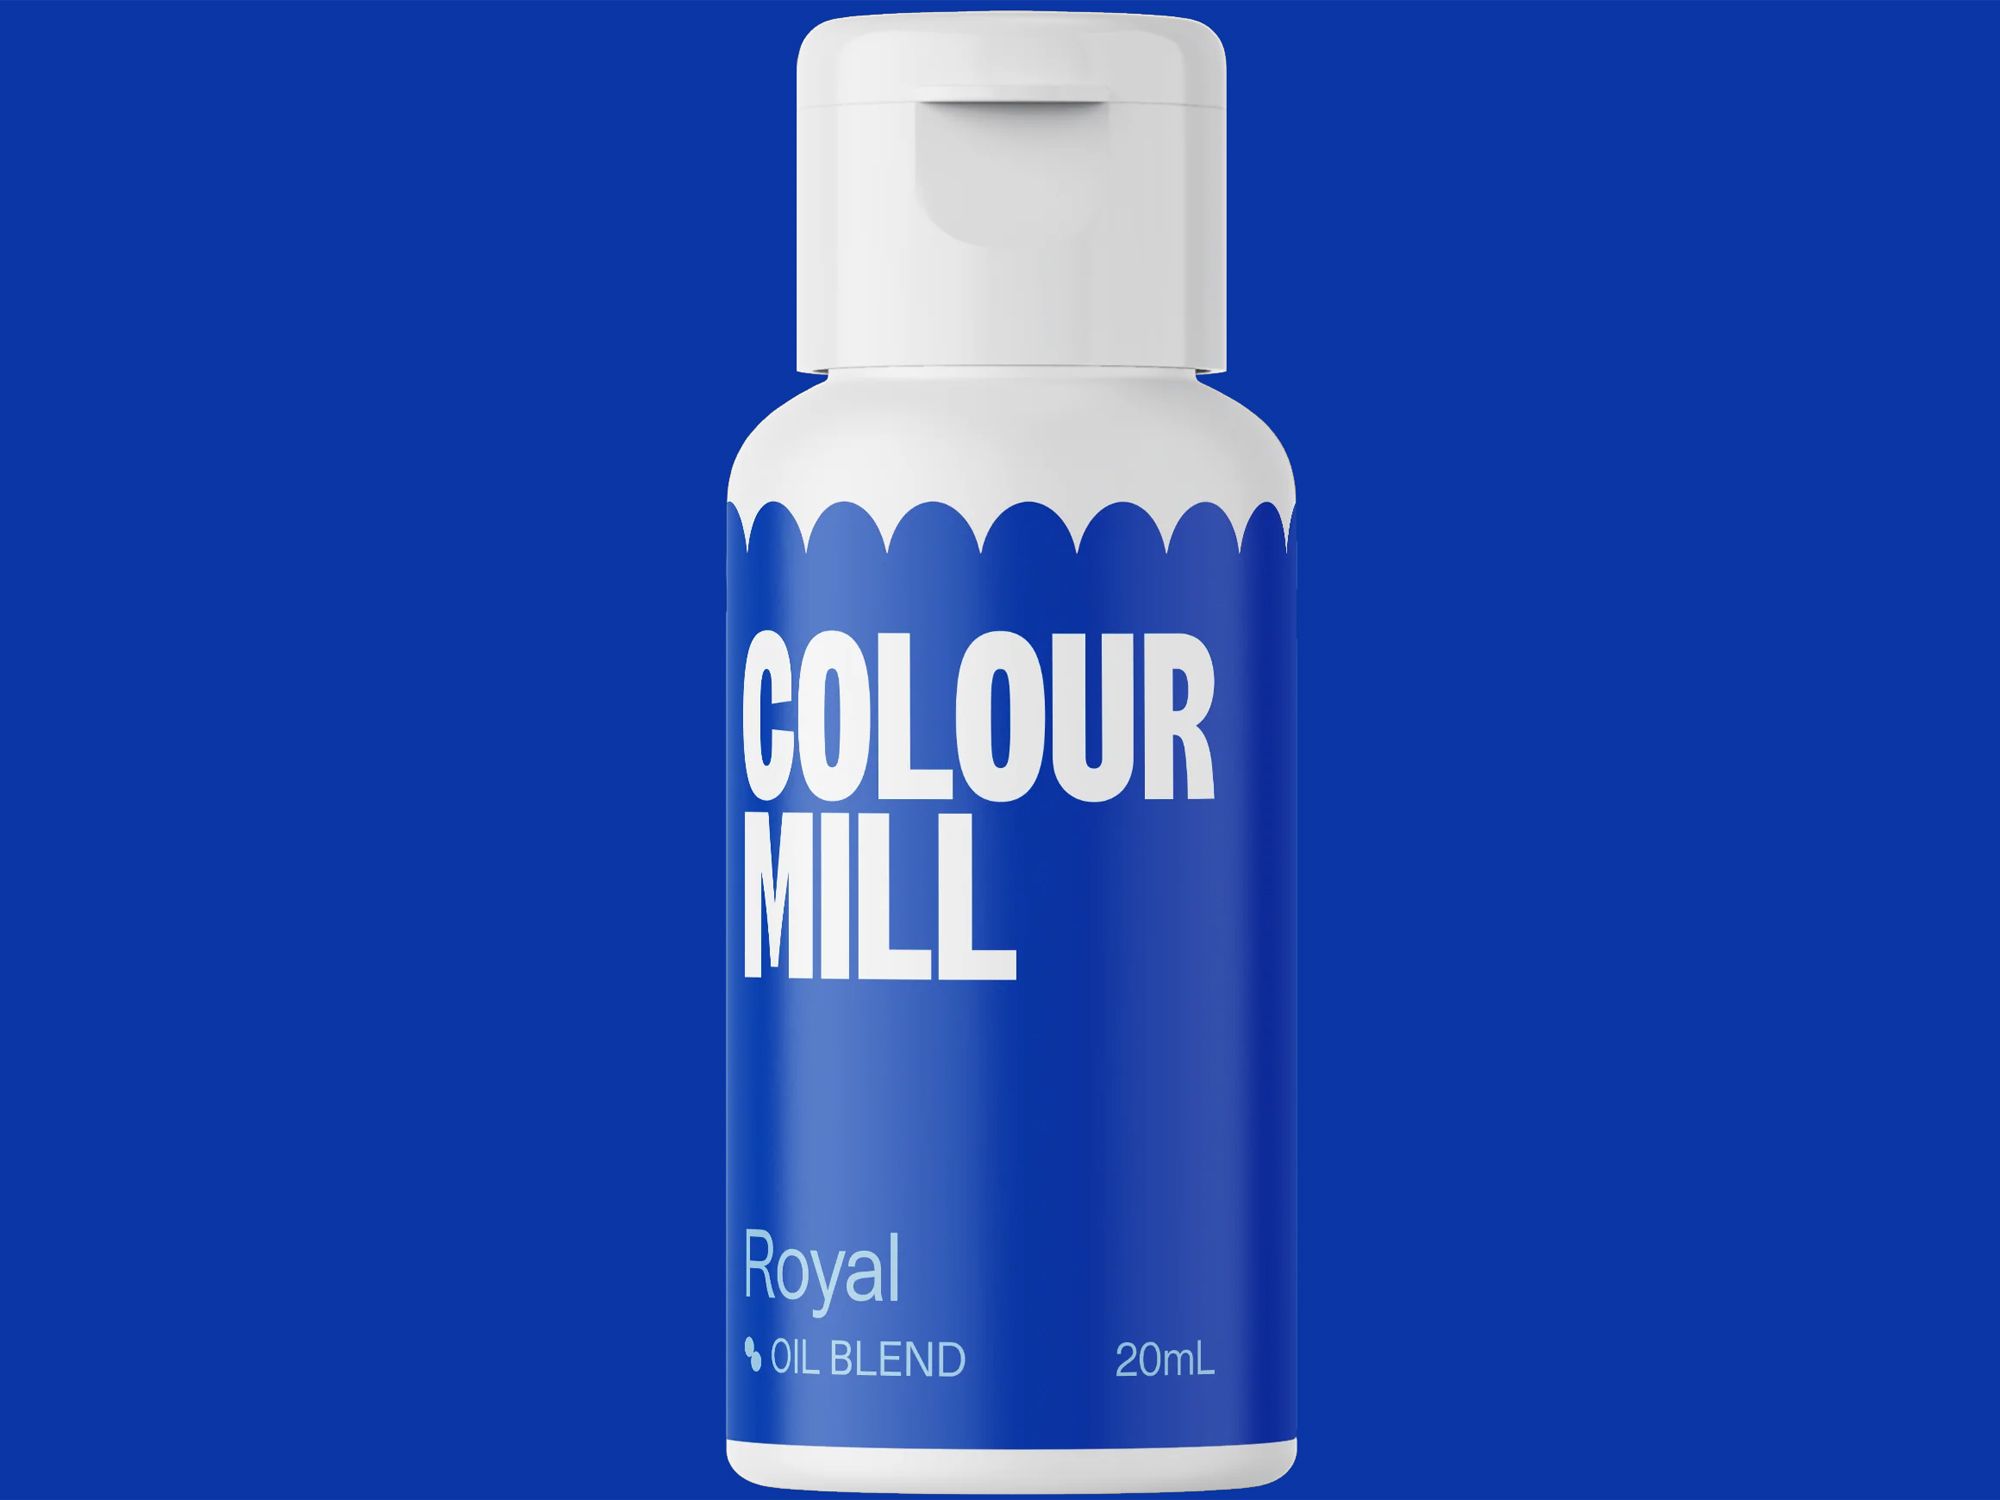 Colour Mill Royal (Oil Blend) 20ml